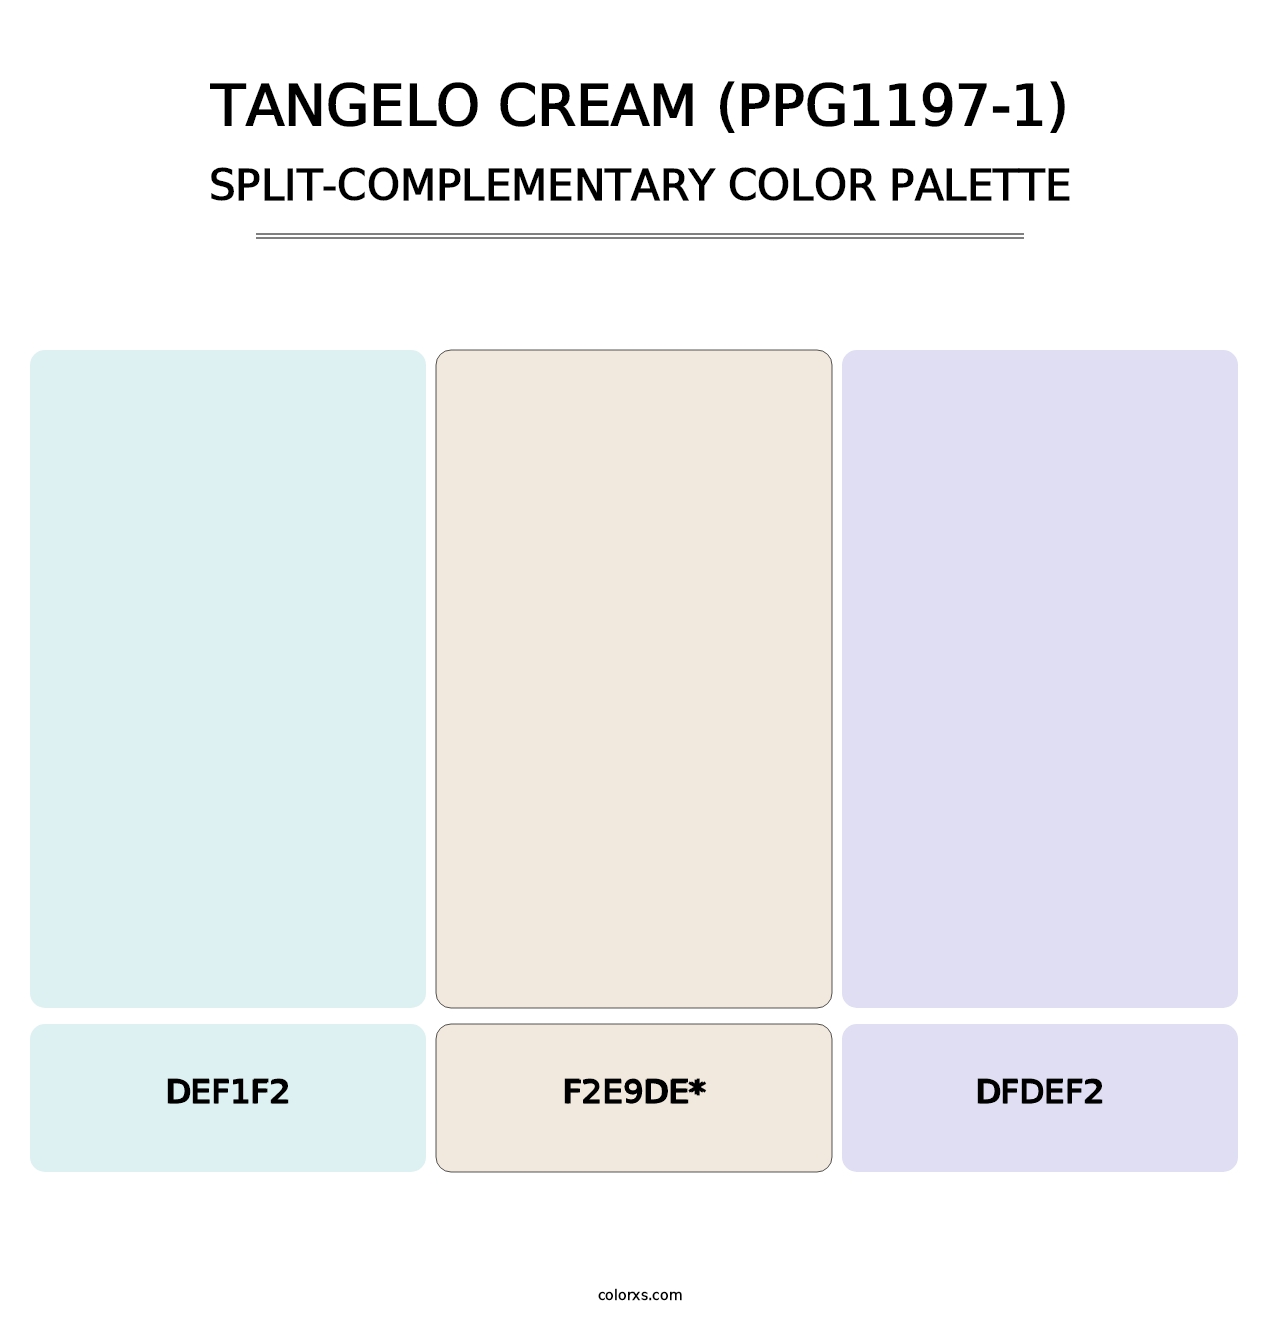 Tangelo Cream (PPG1197-1) - Split-Complementary Color Palette